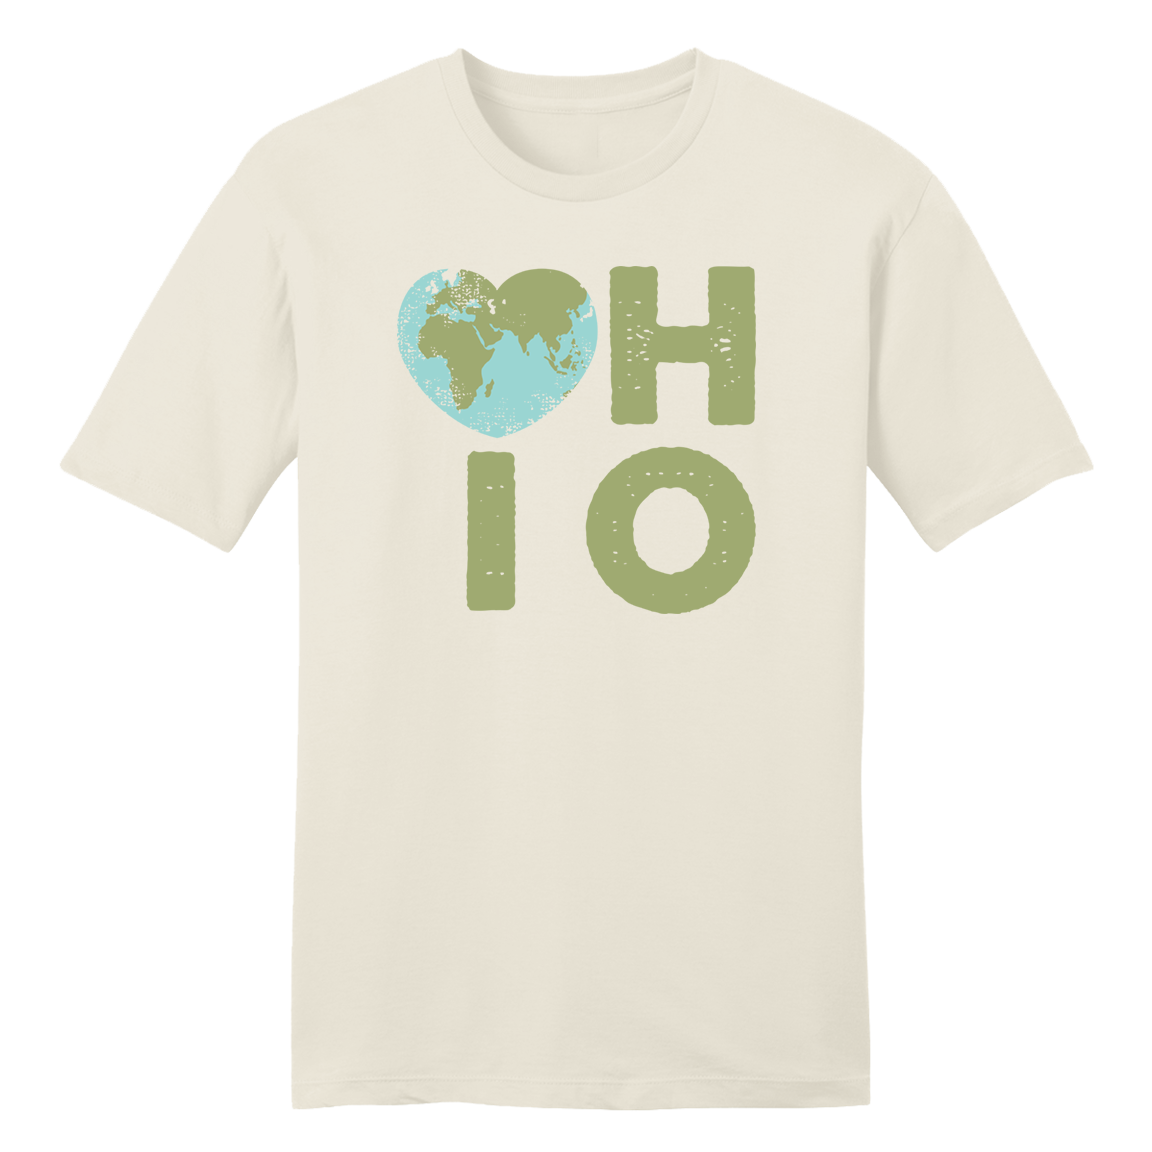 Earth Day Ohio tee